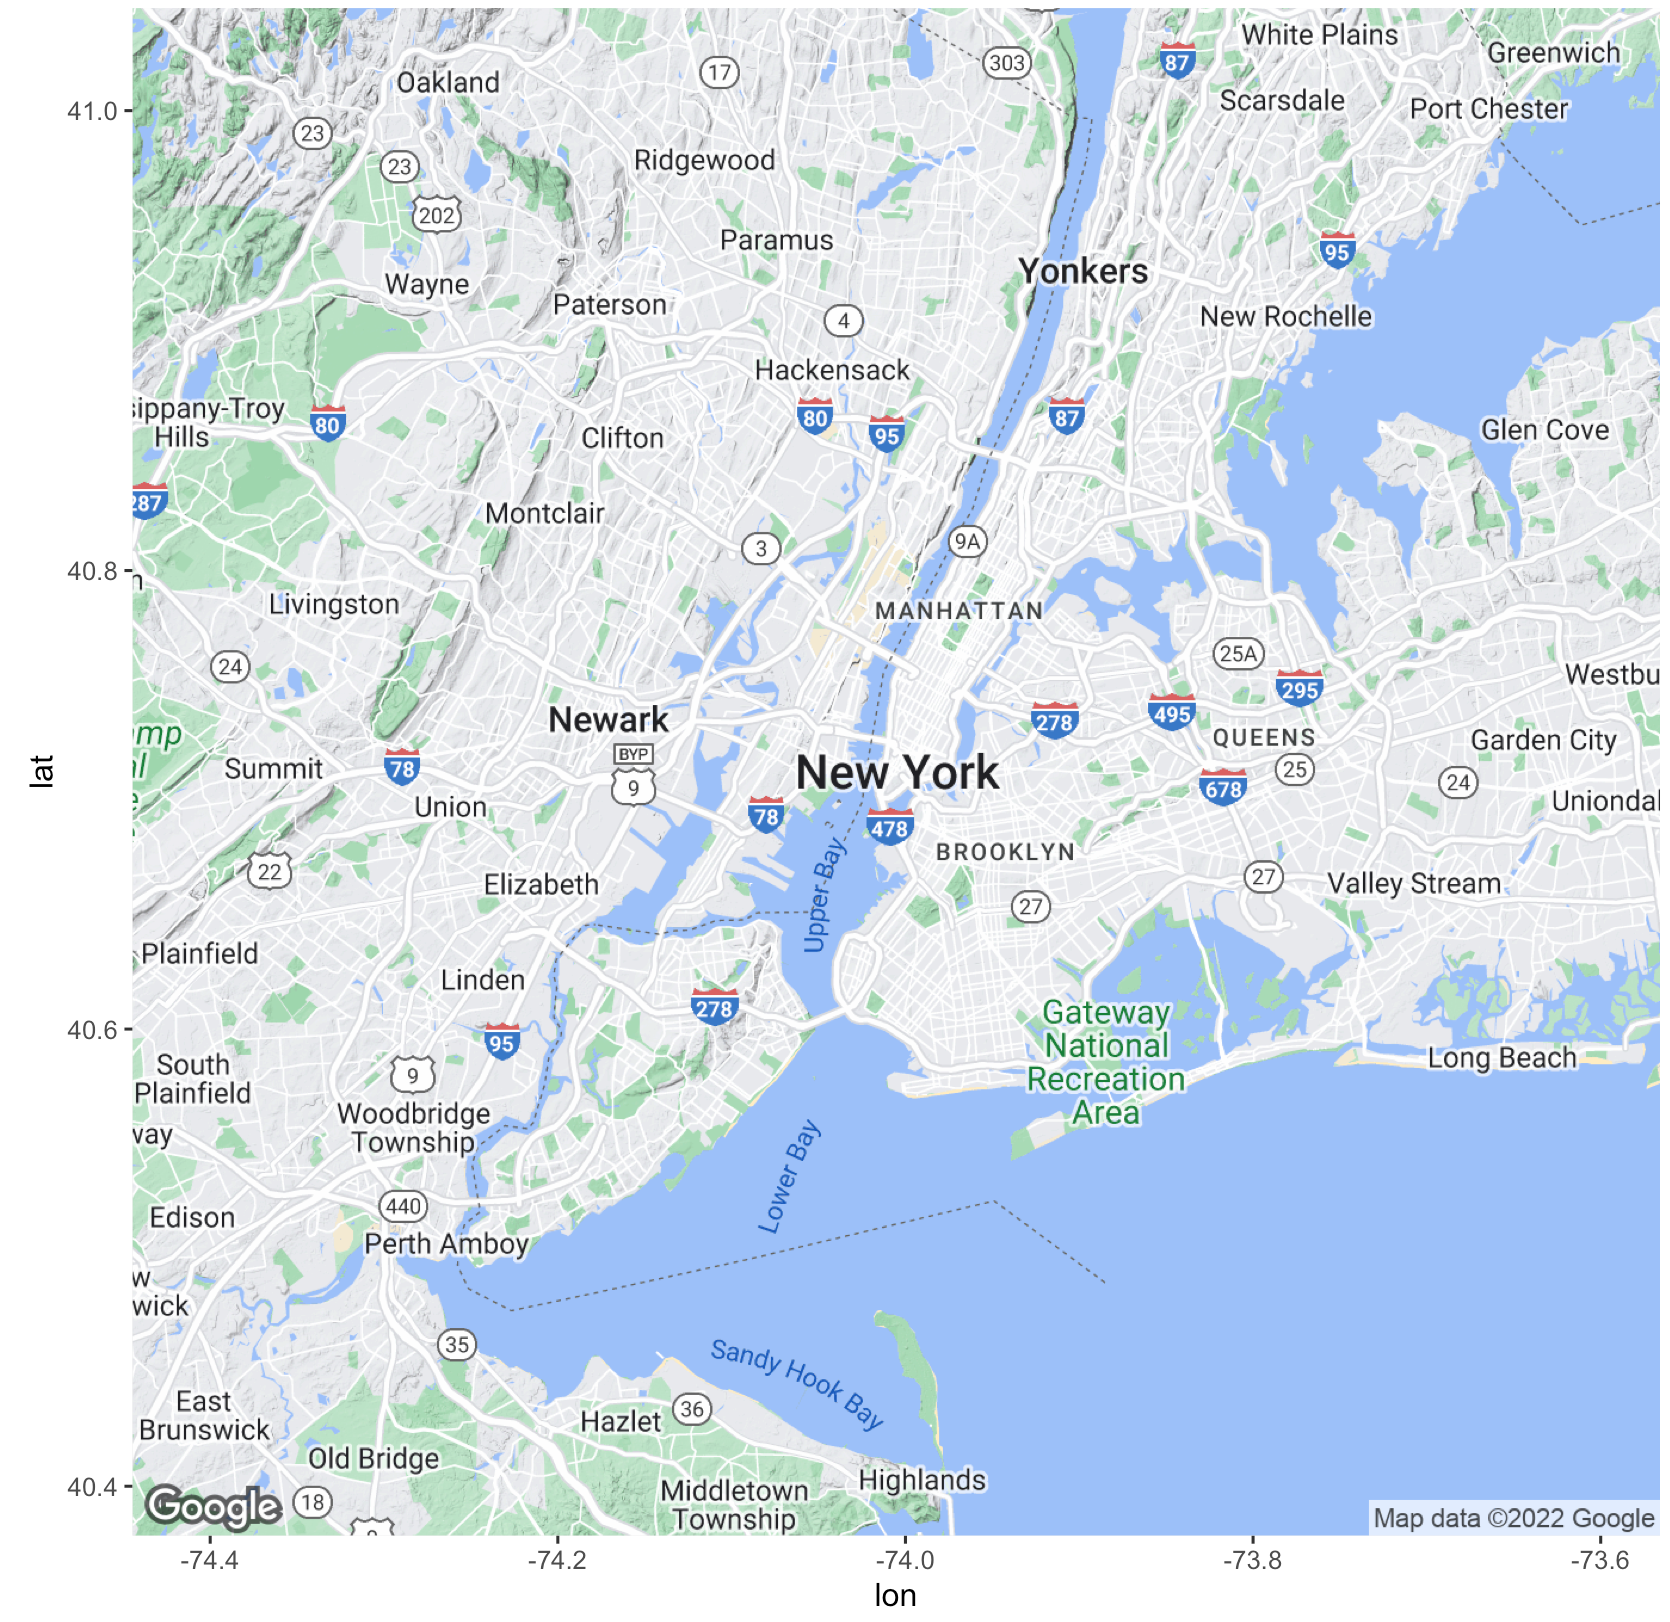 Image 3 - Basic ggmap map of New York City